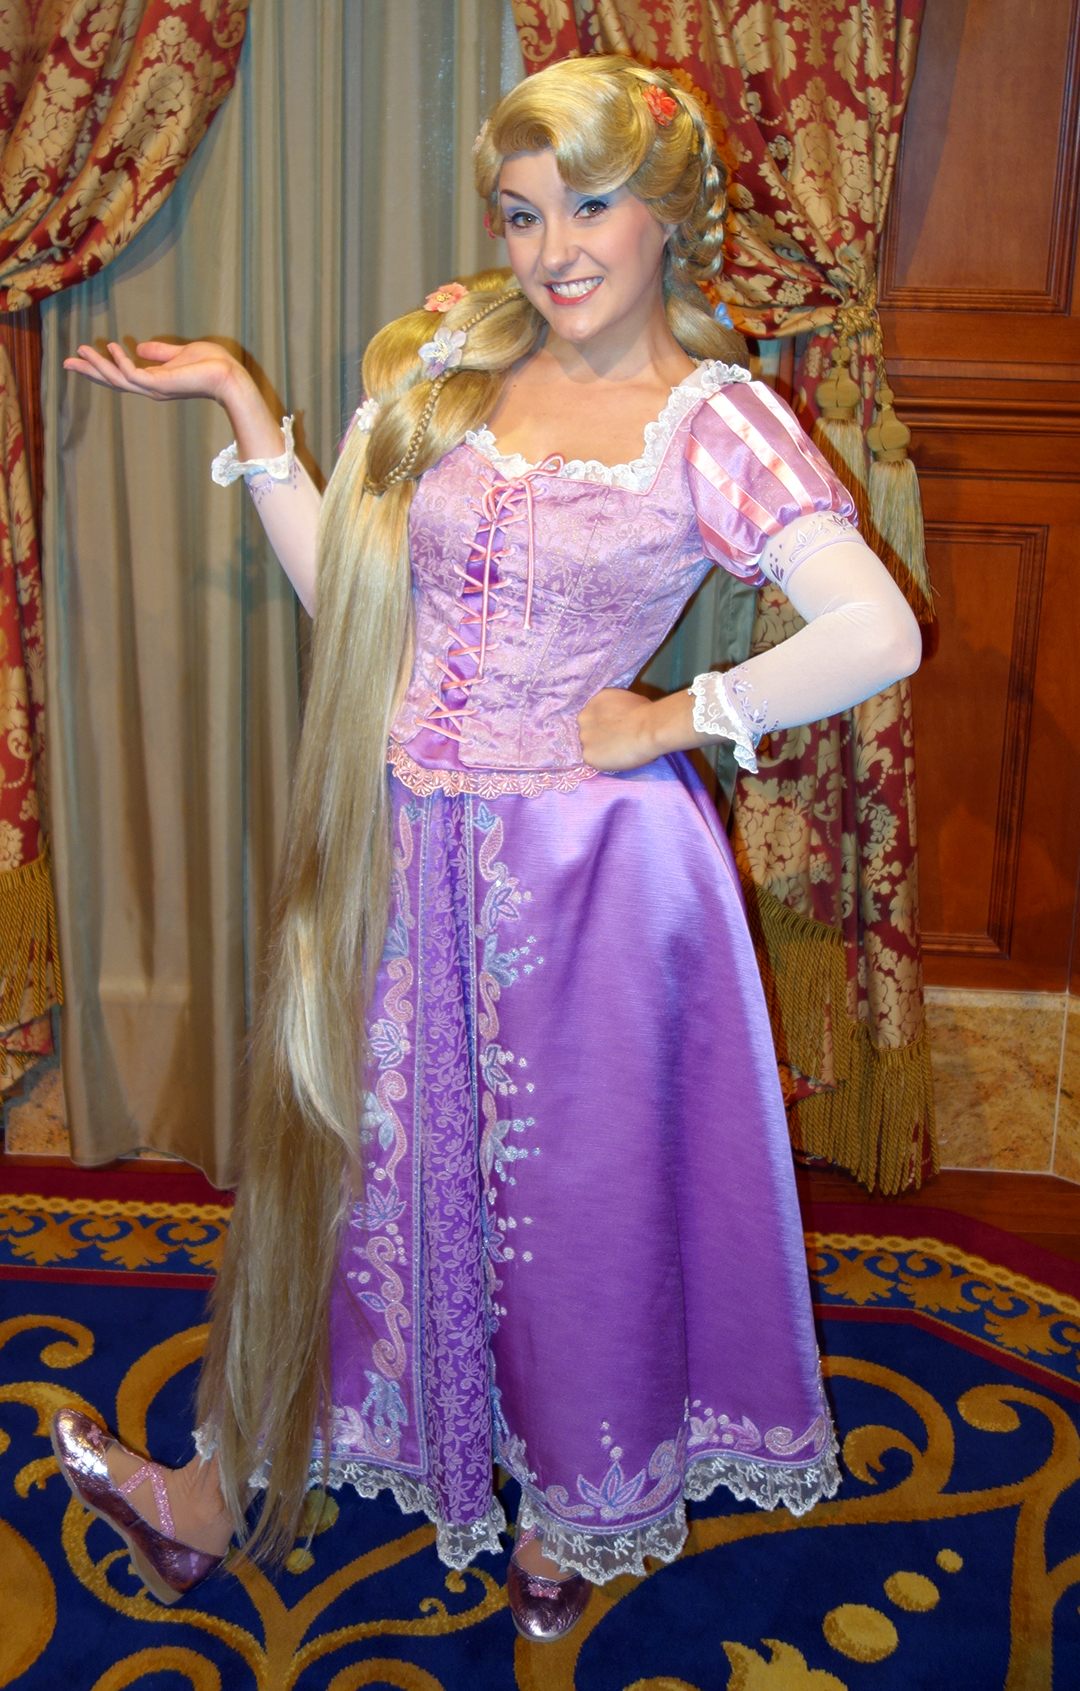 Rapunzel at Princess Fairytale Hall in the Magic Kingdom at Disney World